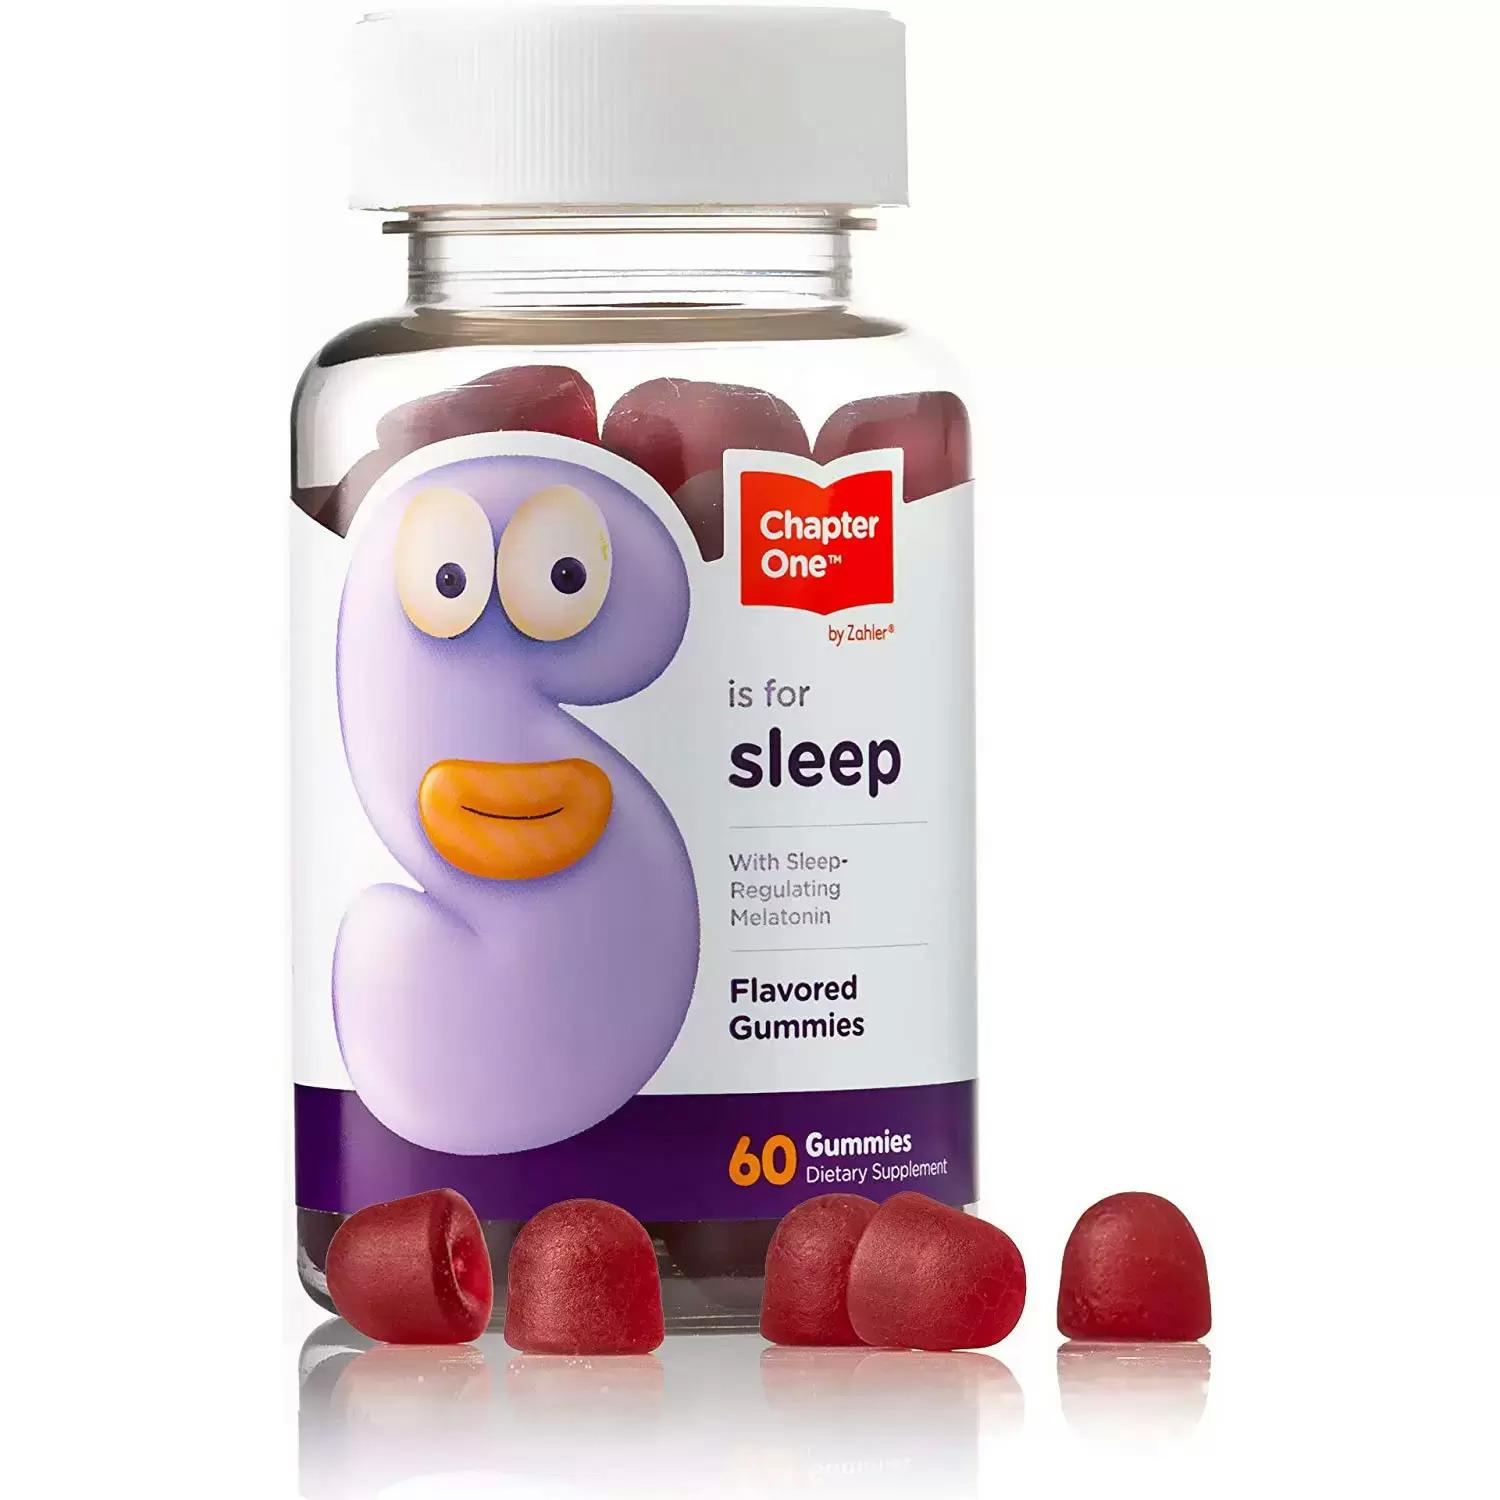 Chapter One Melatonin Sleep Aid Gummies for $3.72 Shipped